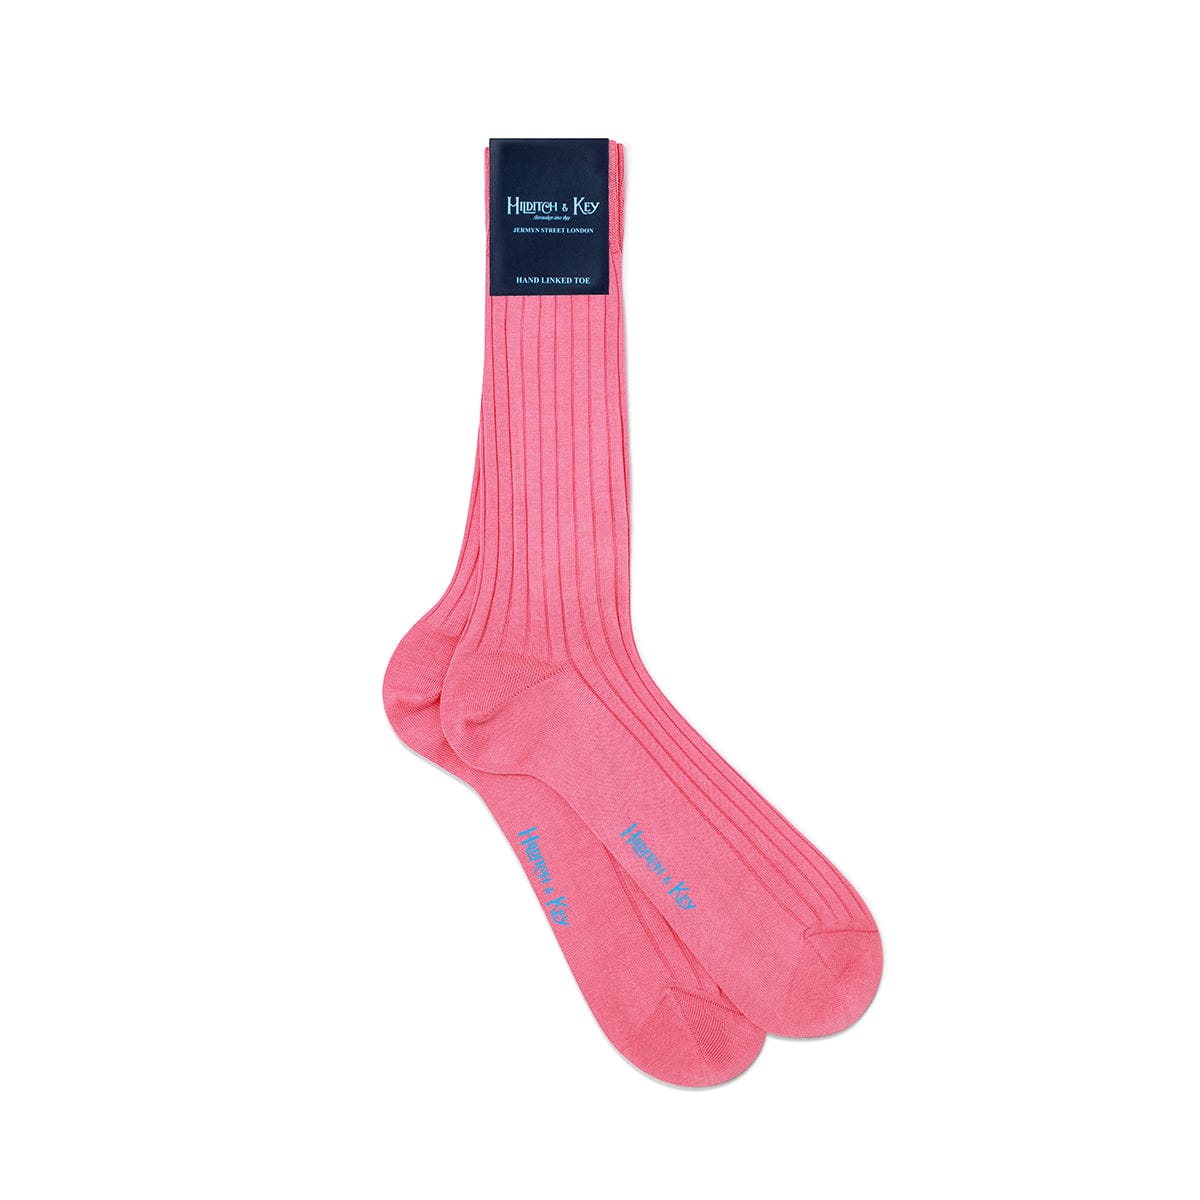 Short Plain Pink Cotton Socks